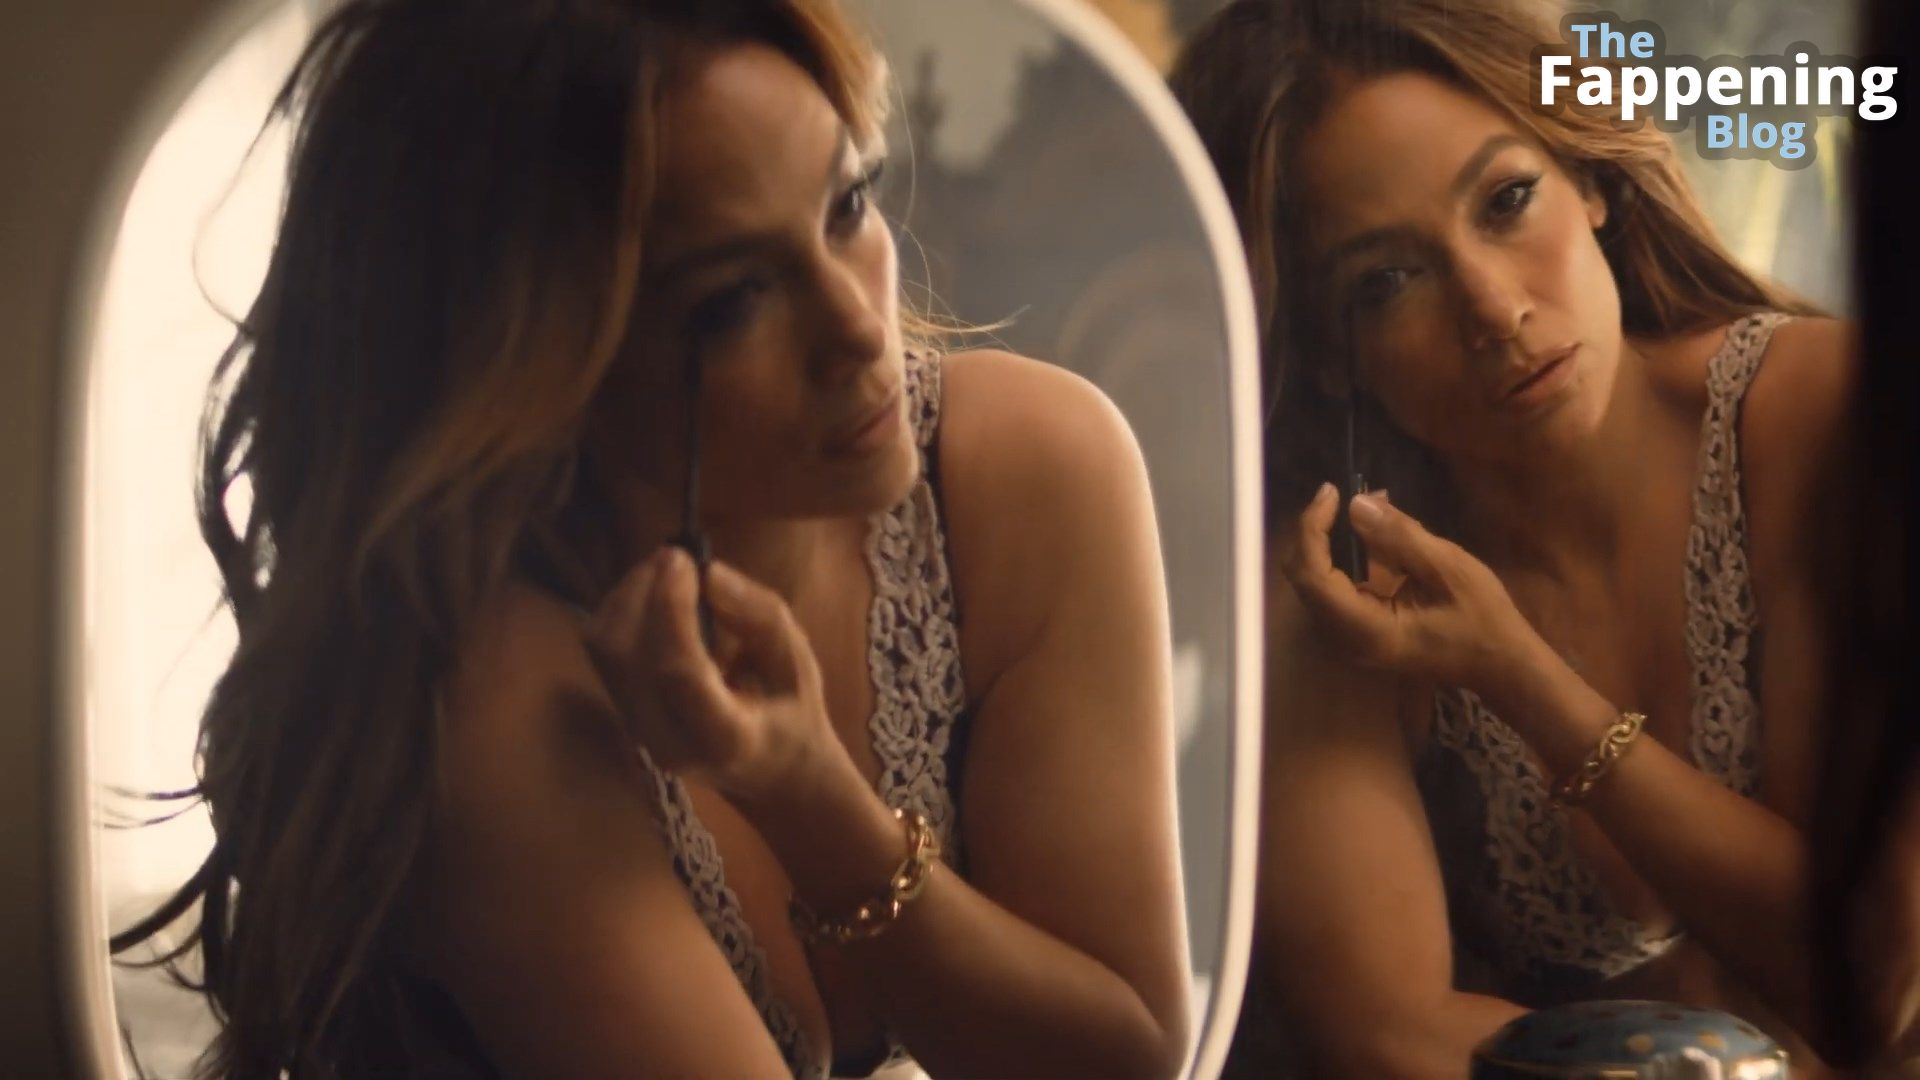 Jennifer-Lopez-Sexy-4-The-Fappening-Blog.jpg